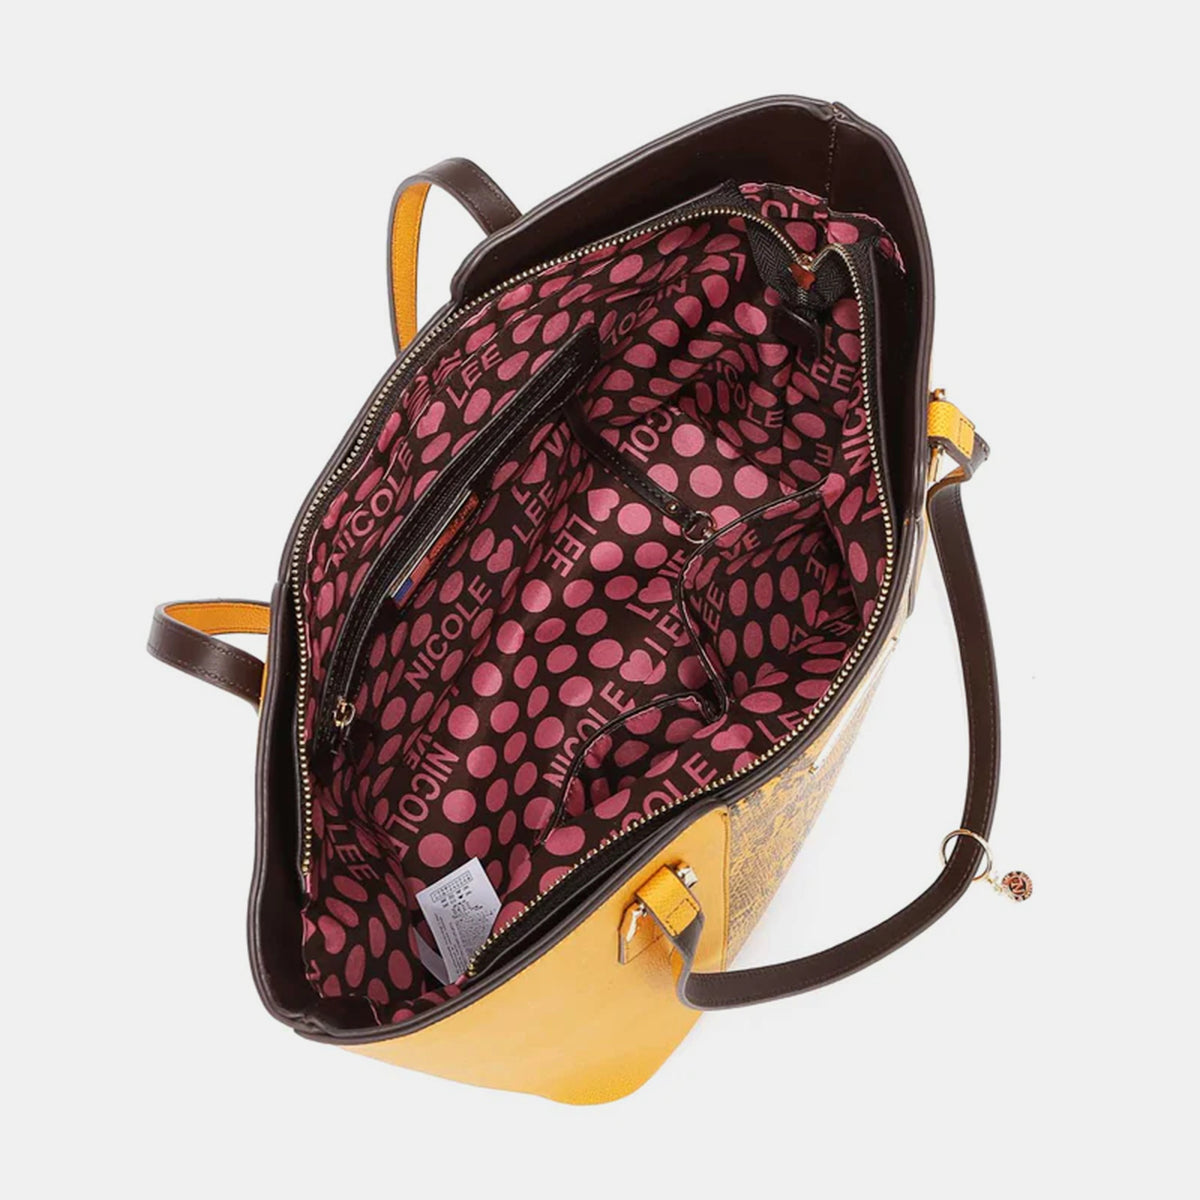 Nicole Lee USA 3-Piece Snake Print Handbag Set - TiffanyzKlozet